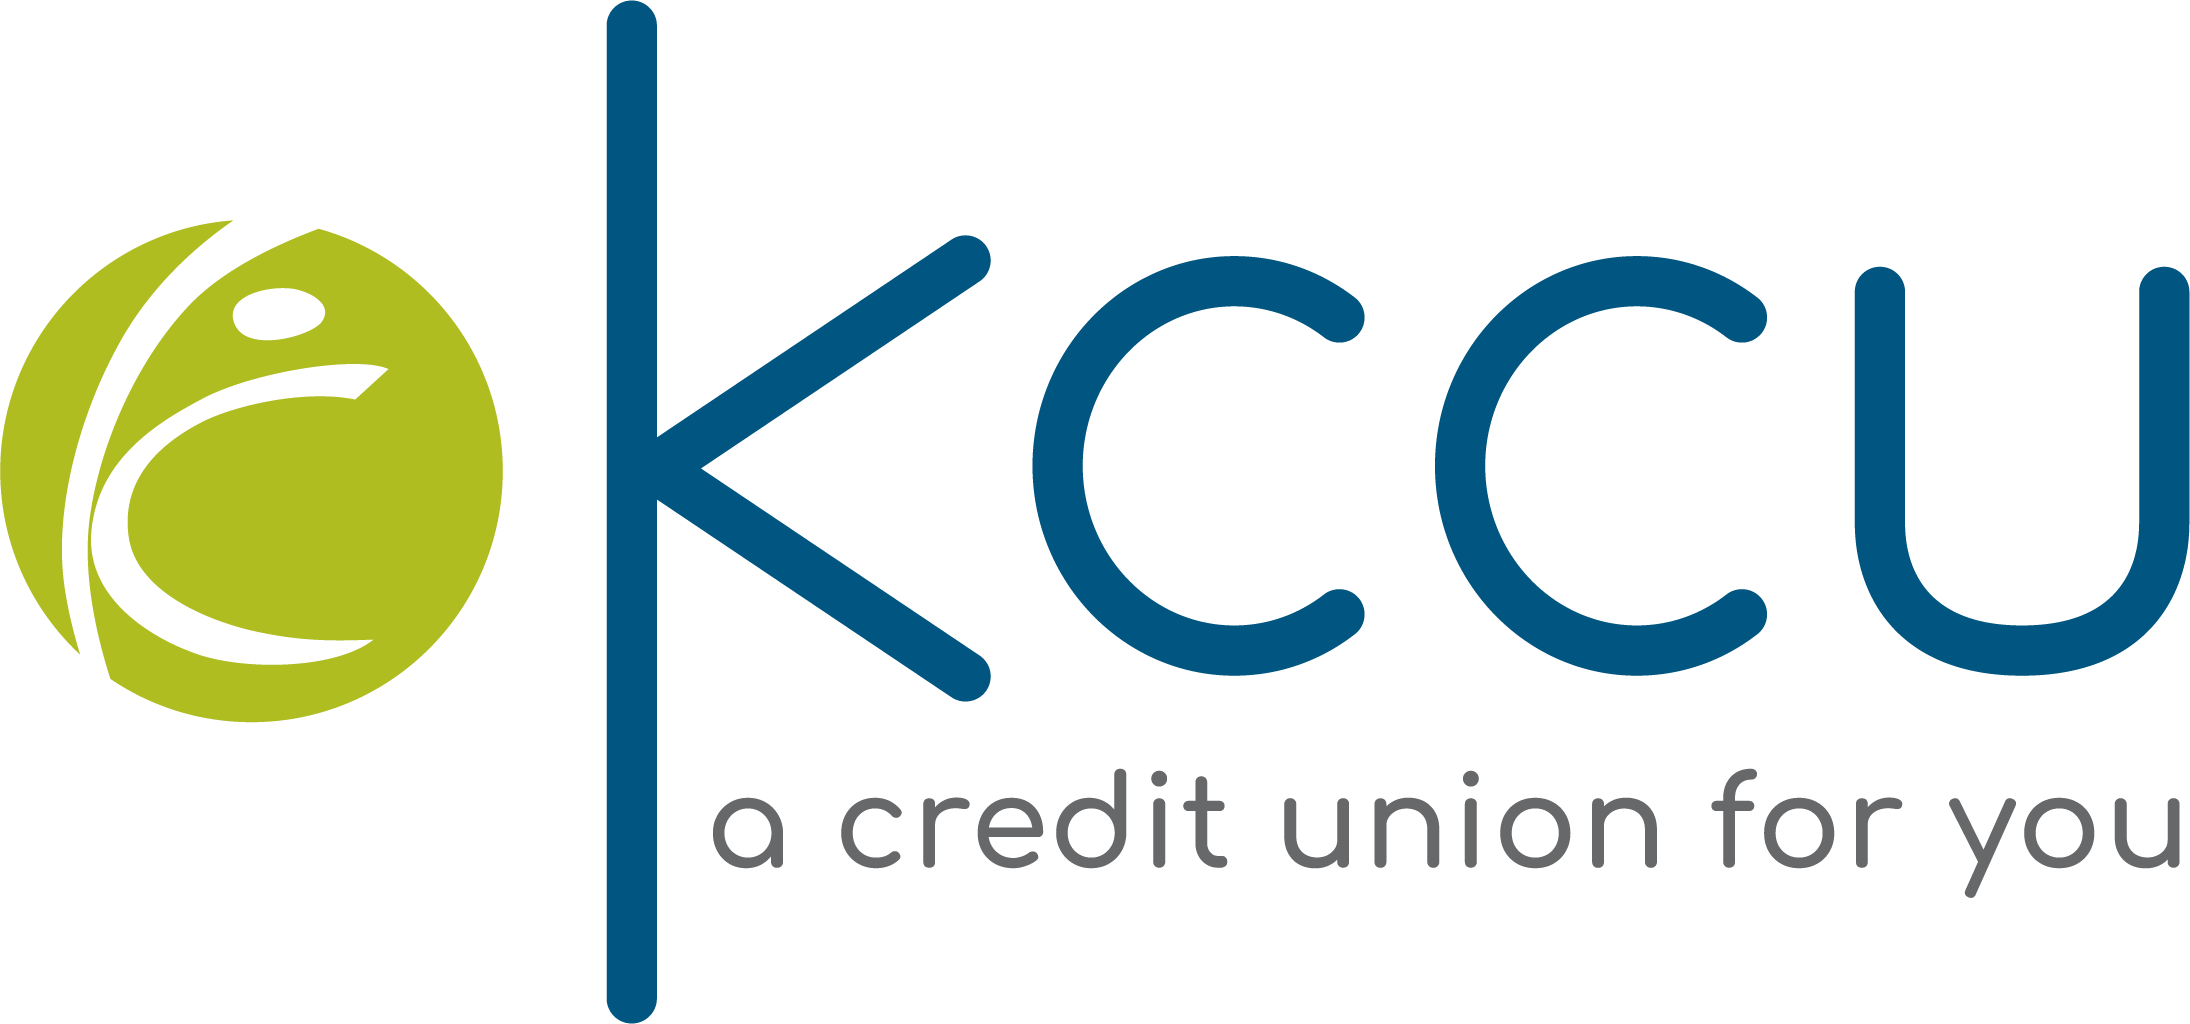 Kellogg Community Credit Union